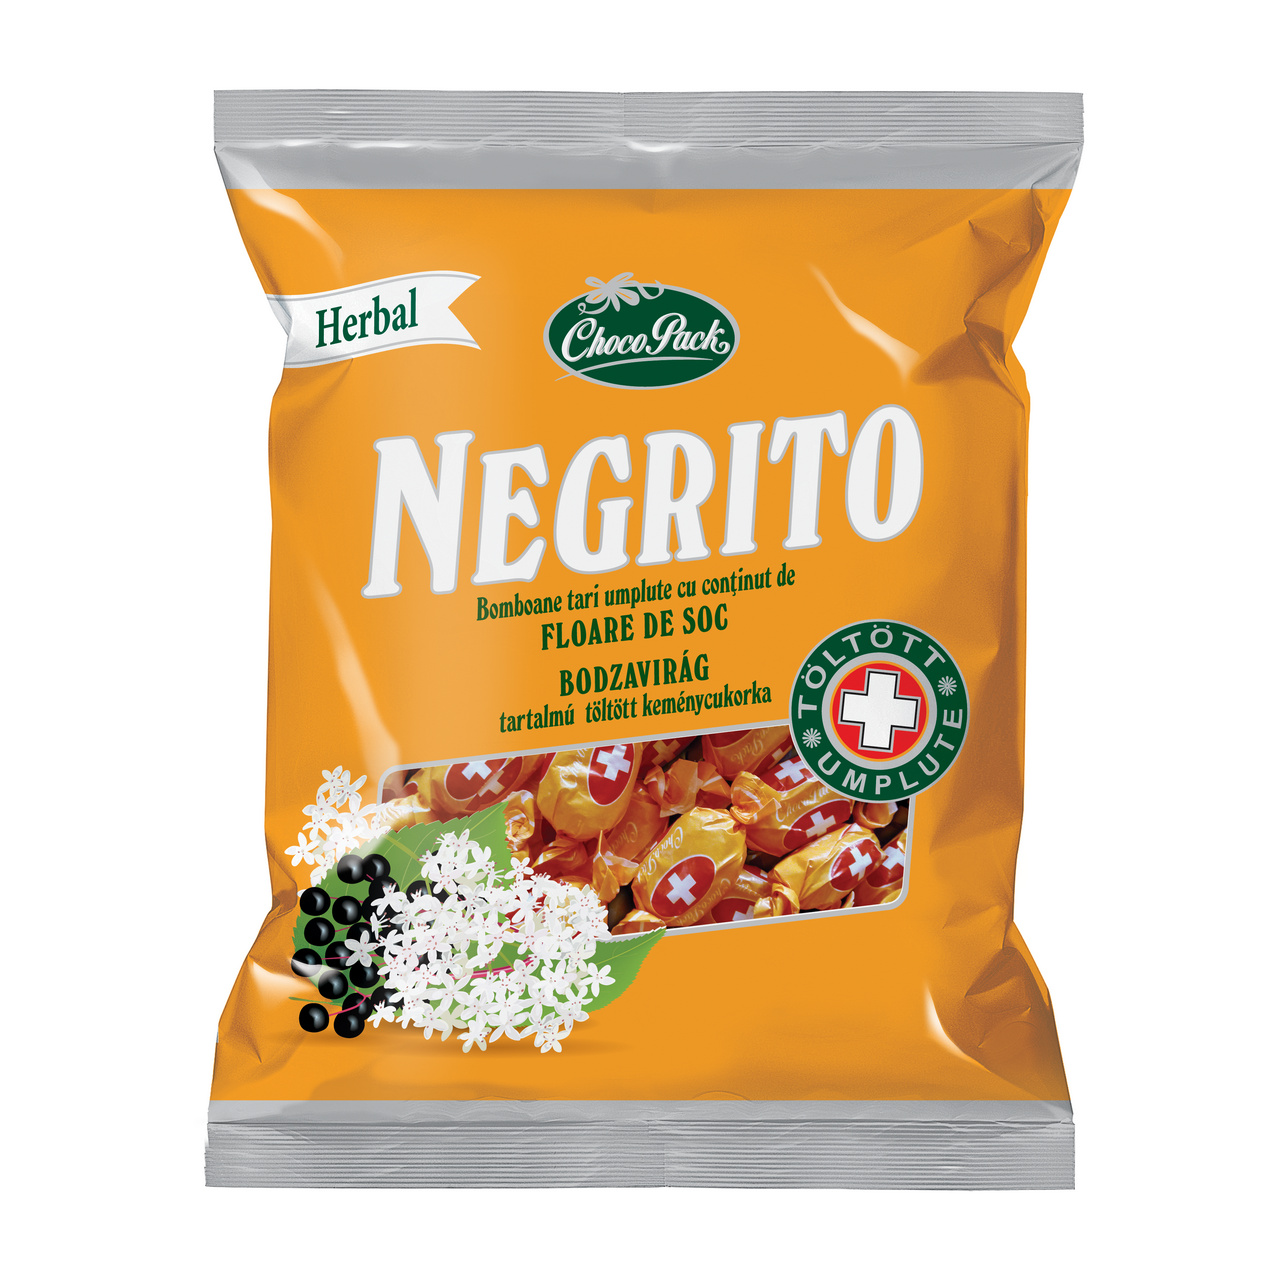 Negrito – Bomboane tari, umplute, cu extract de floare de soc, 70 g